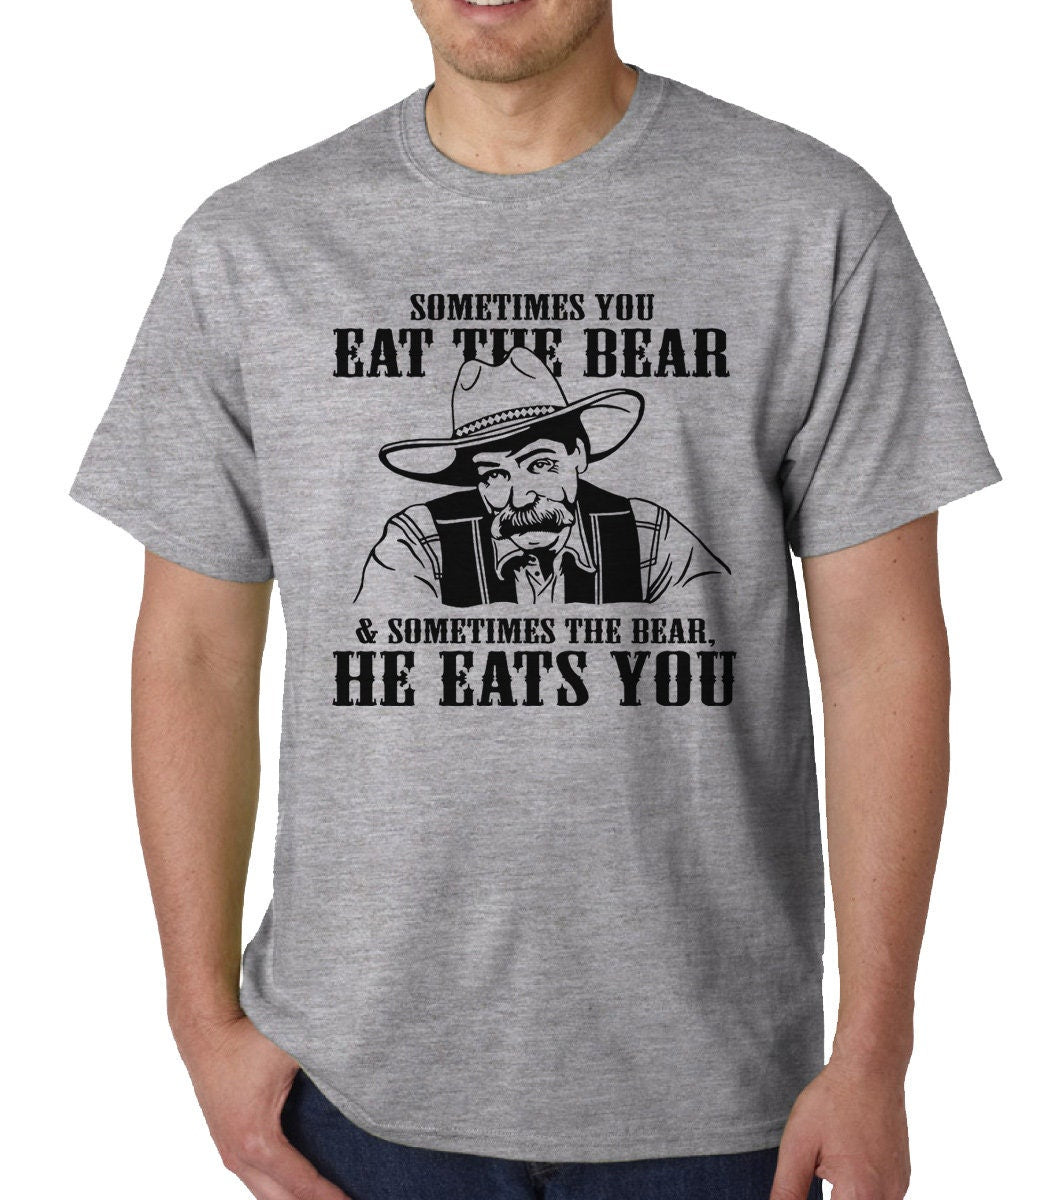 Sometimes You Eat The Bear (Big Lebowski quote) t-shirt